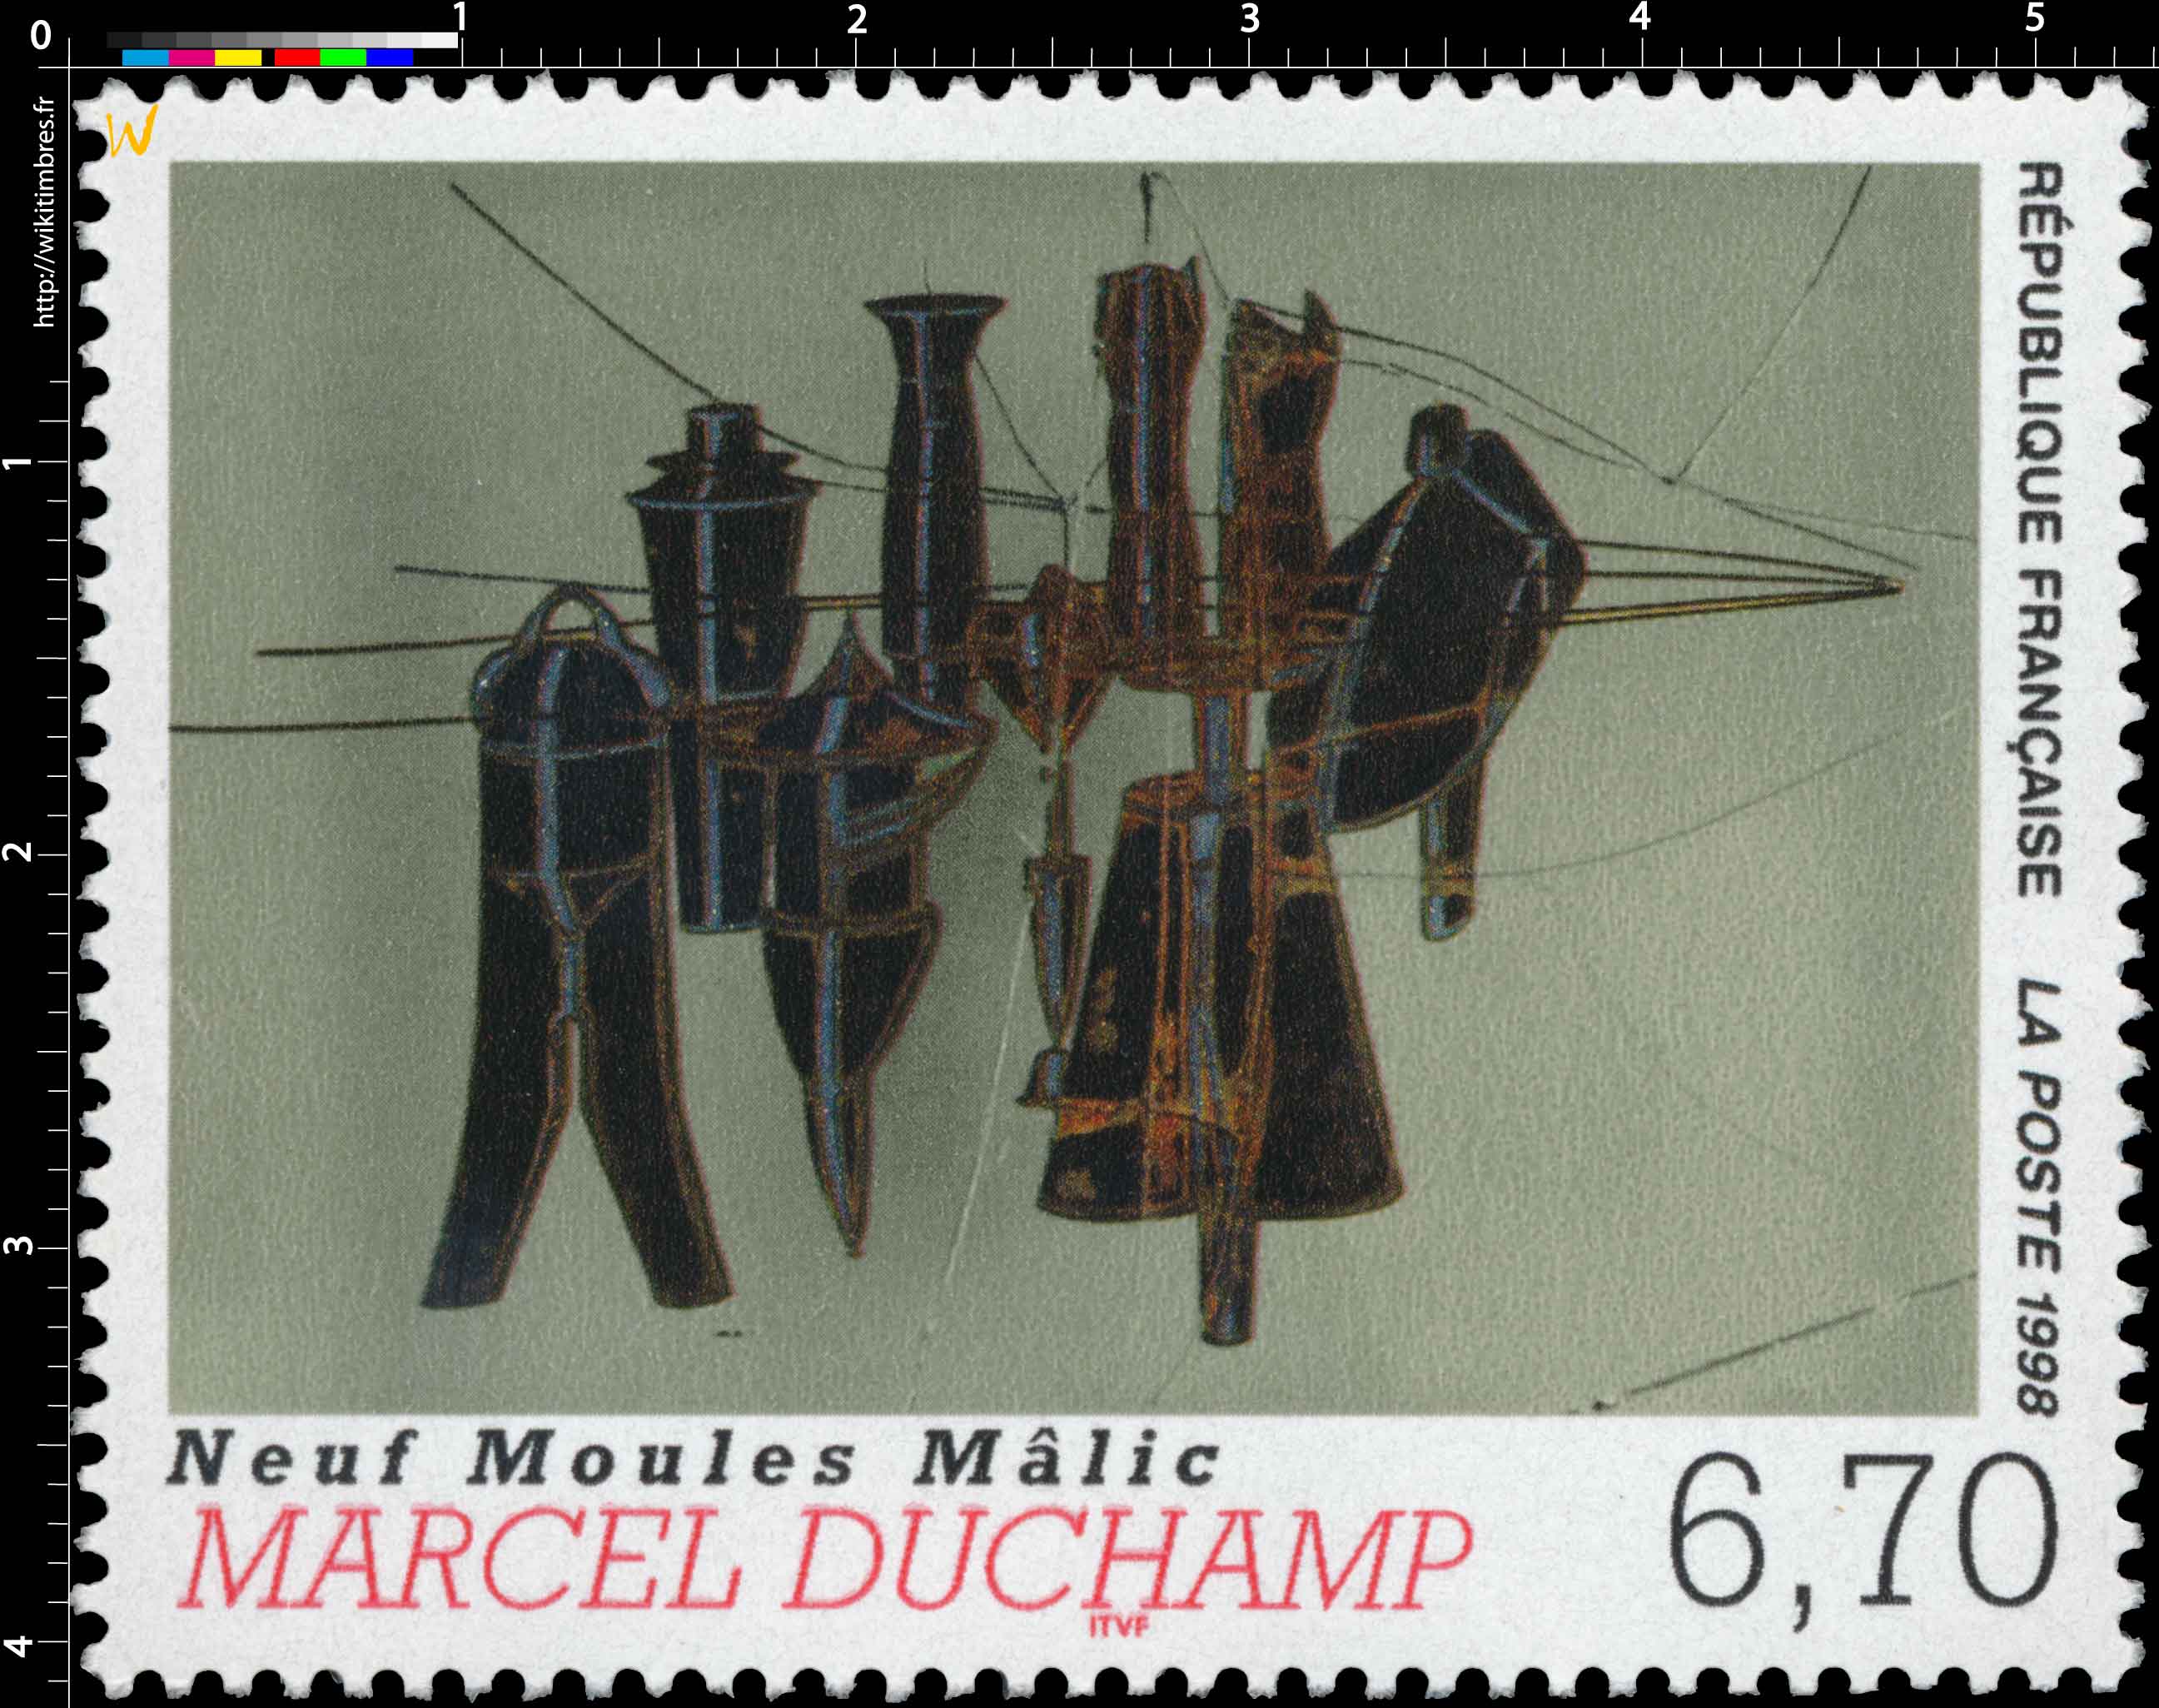 1998 MARCEL DUCHAMP Neuf Moules Mâlic